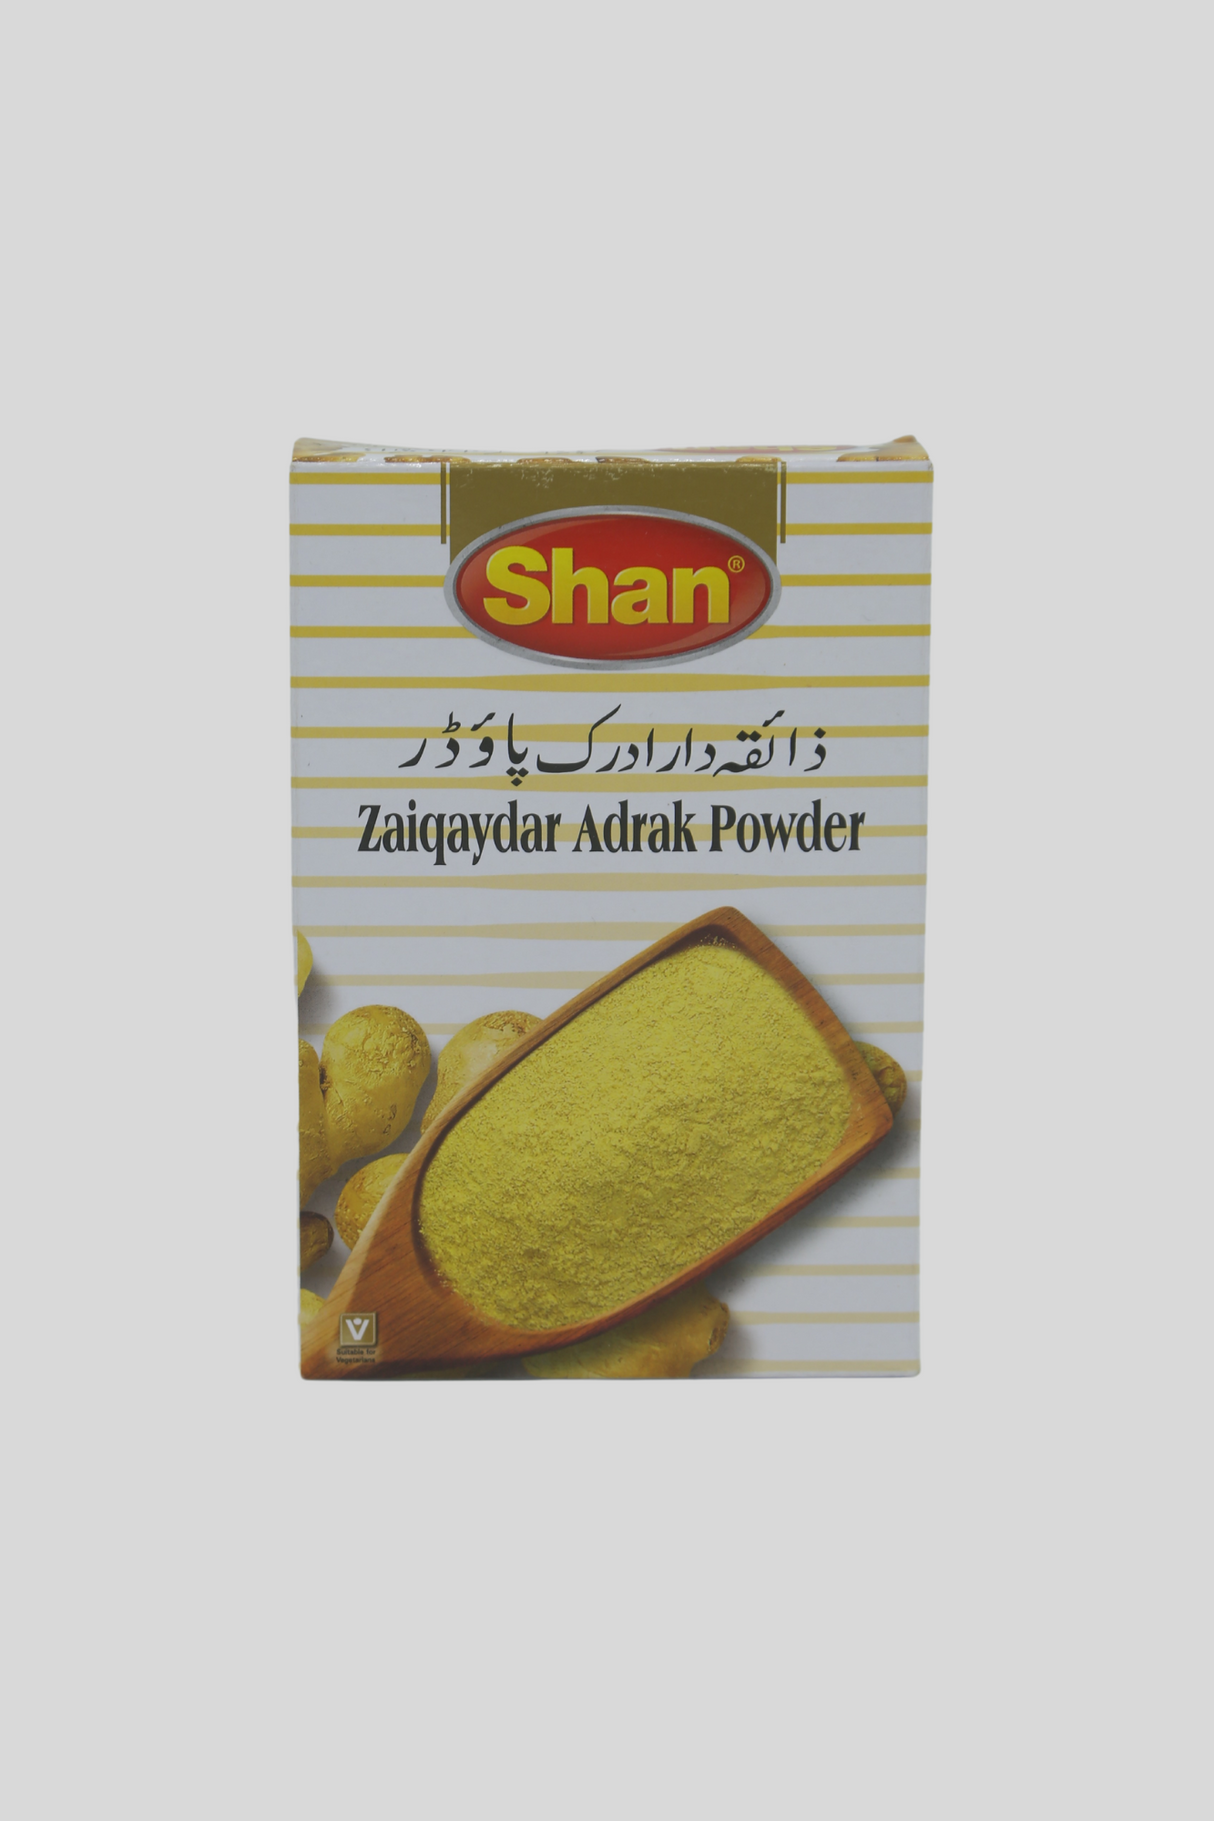 shan ginger powder 50g